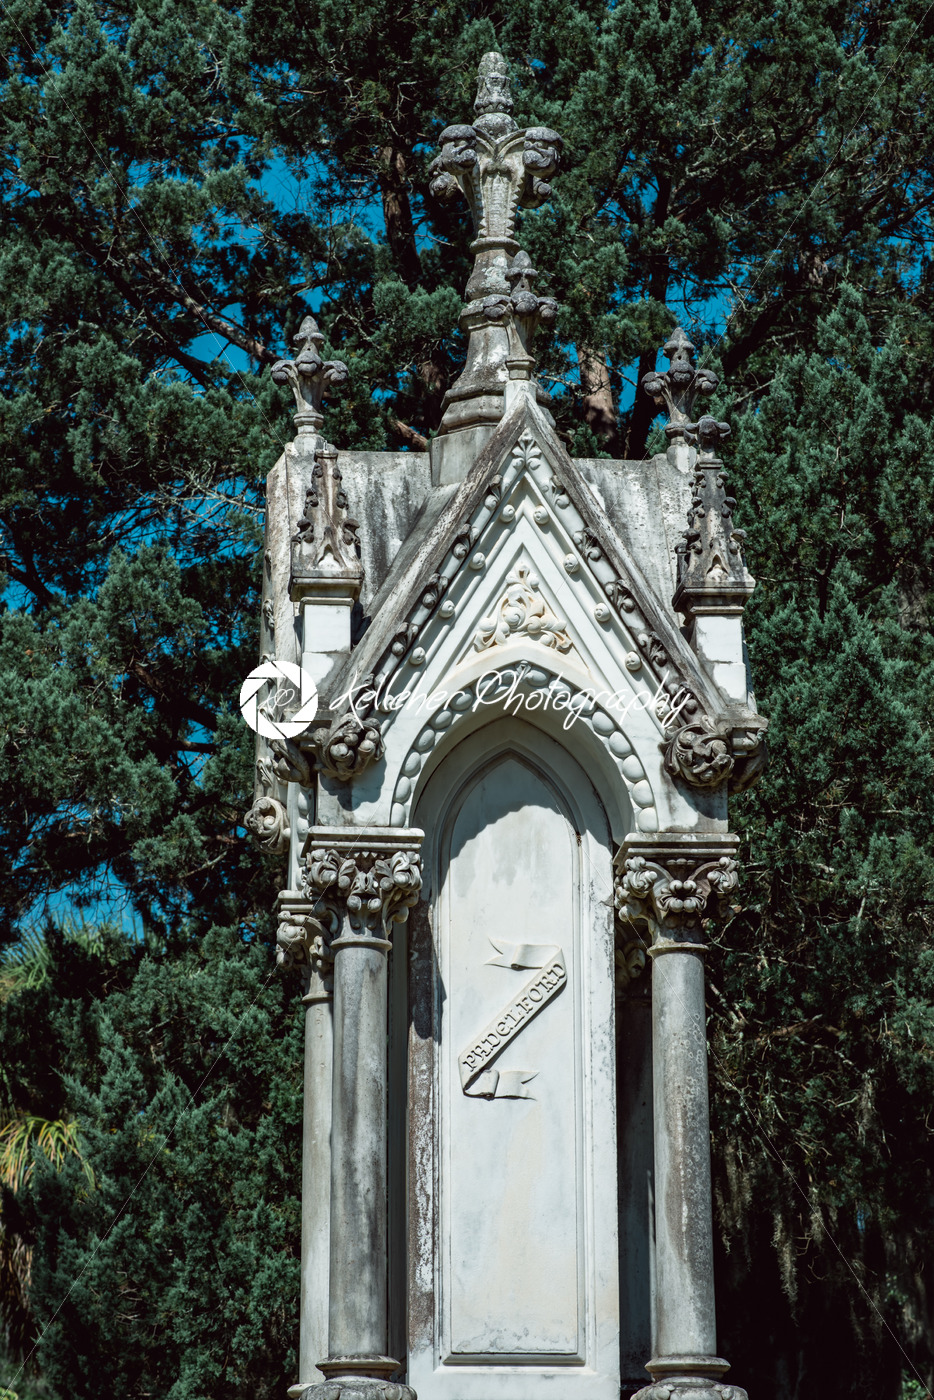 Edward Phdelford Cemetery Statuary Statue Bonaventure Cemetery Savannah Georgia - Kelleher Photography Store